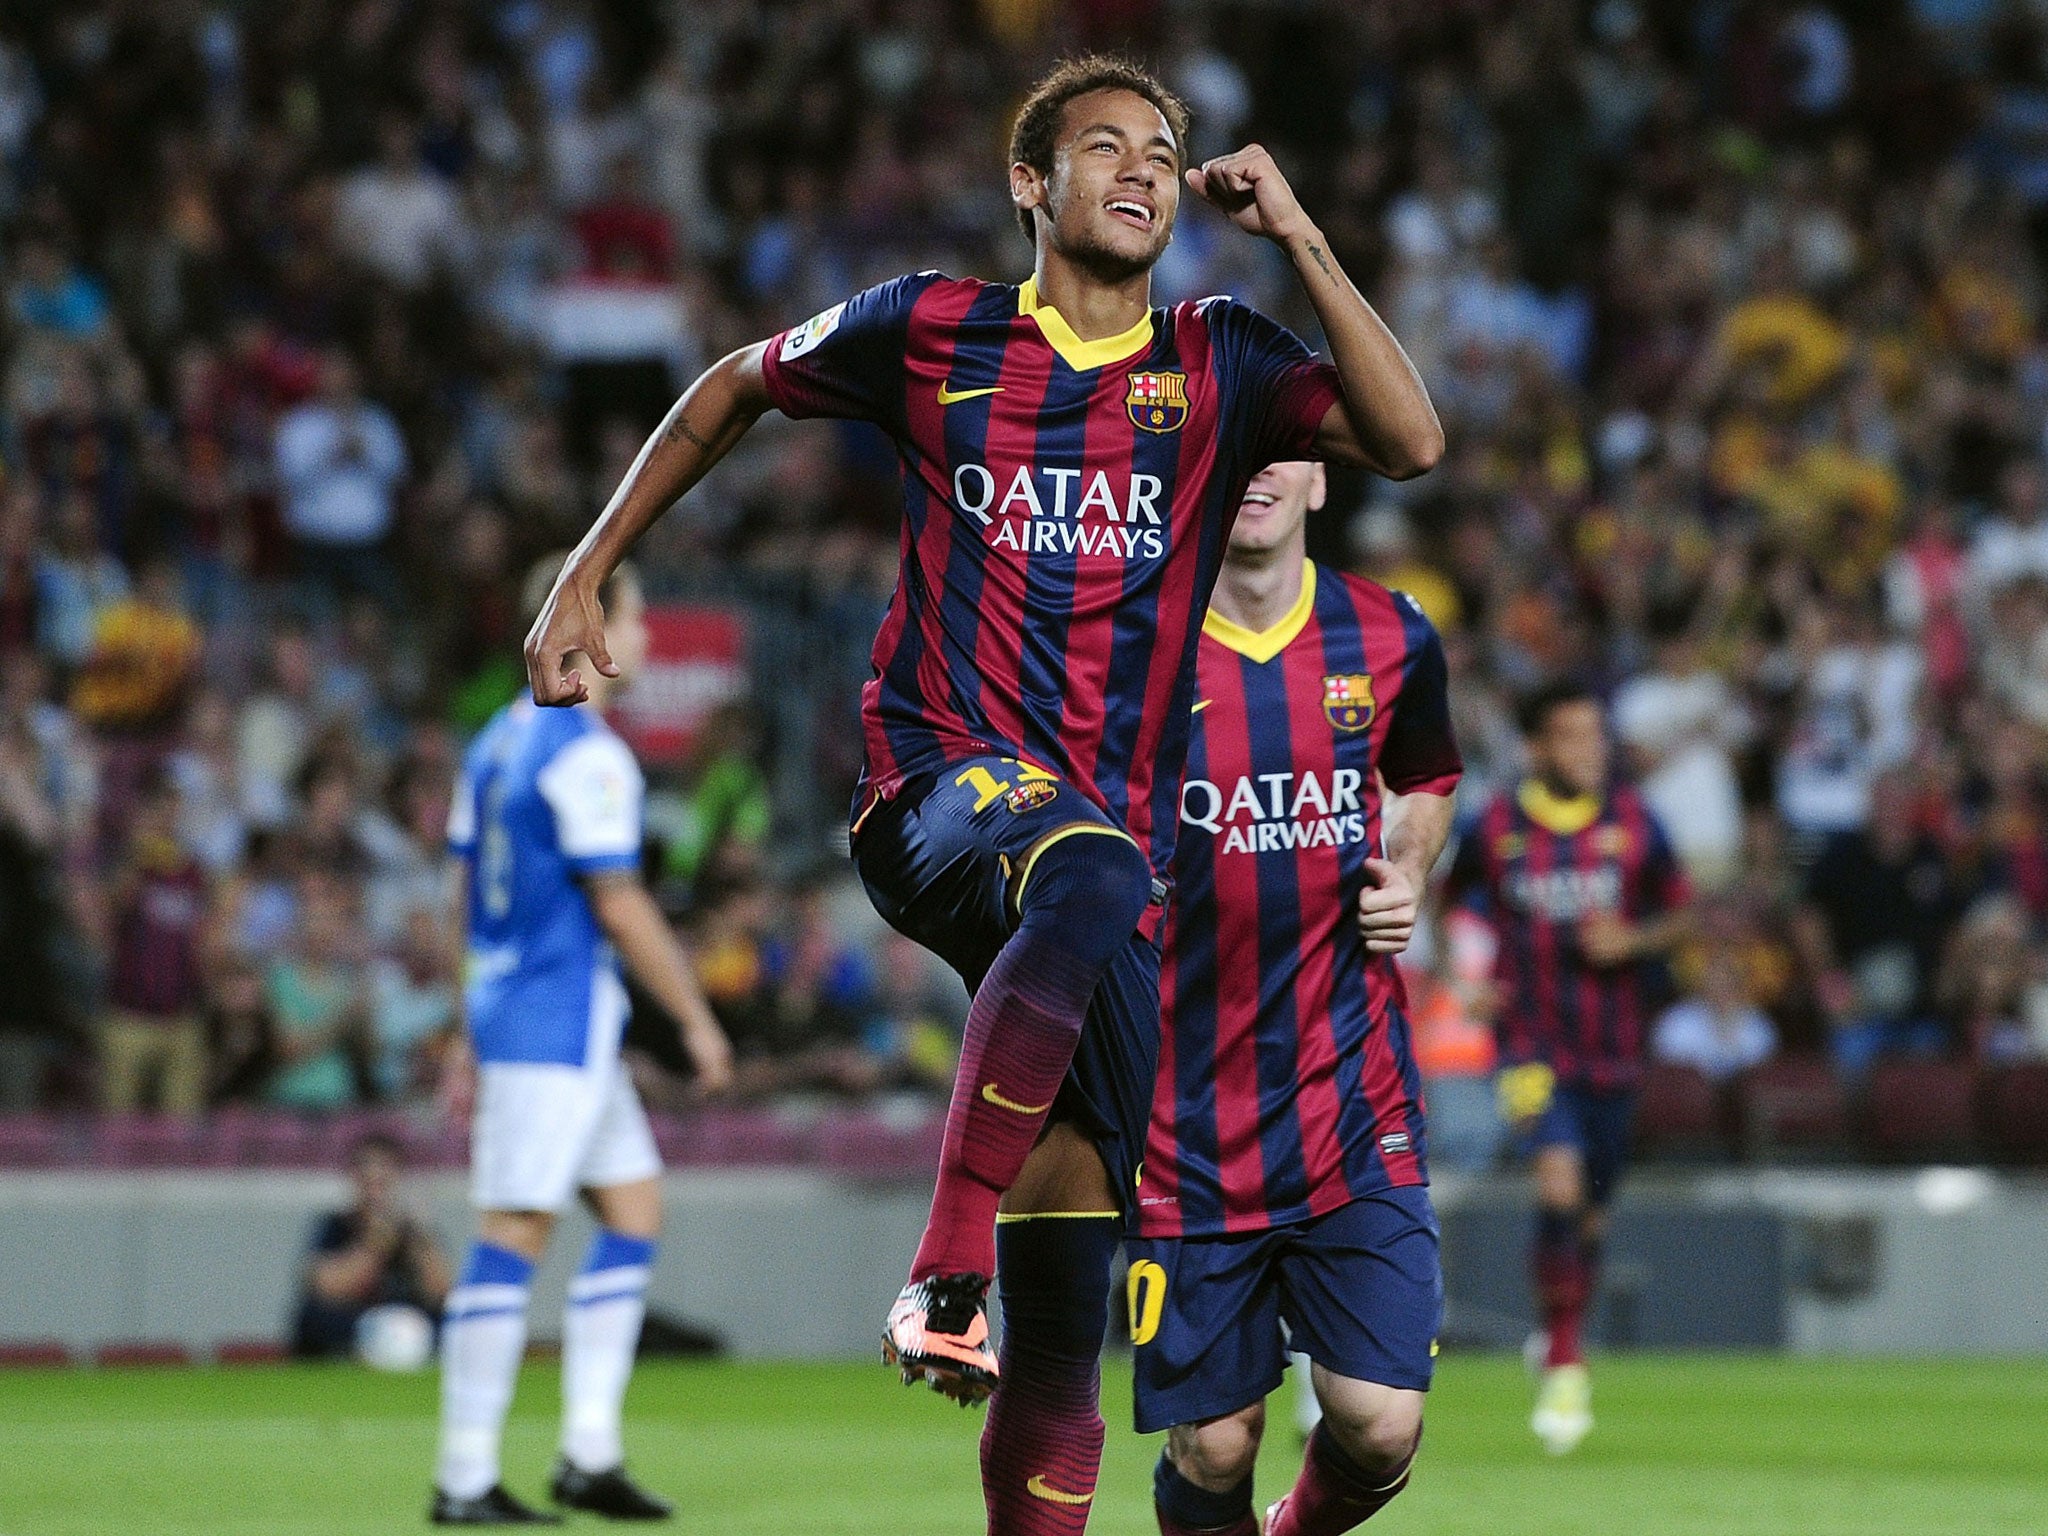 Brazilian Neymar will assume Lionel Messi's mantle